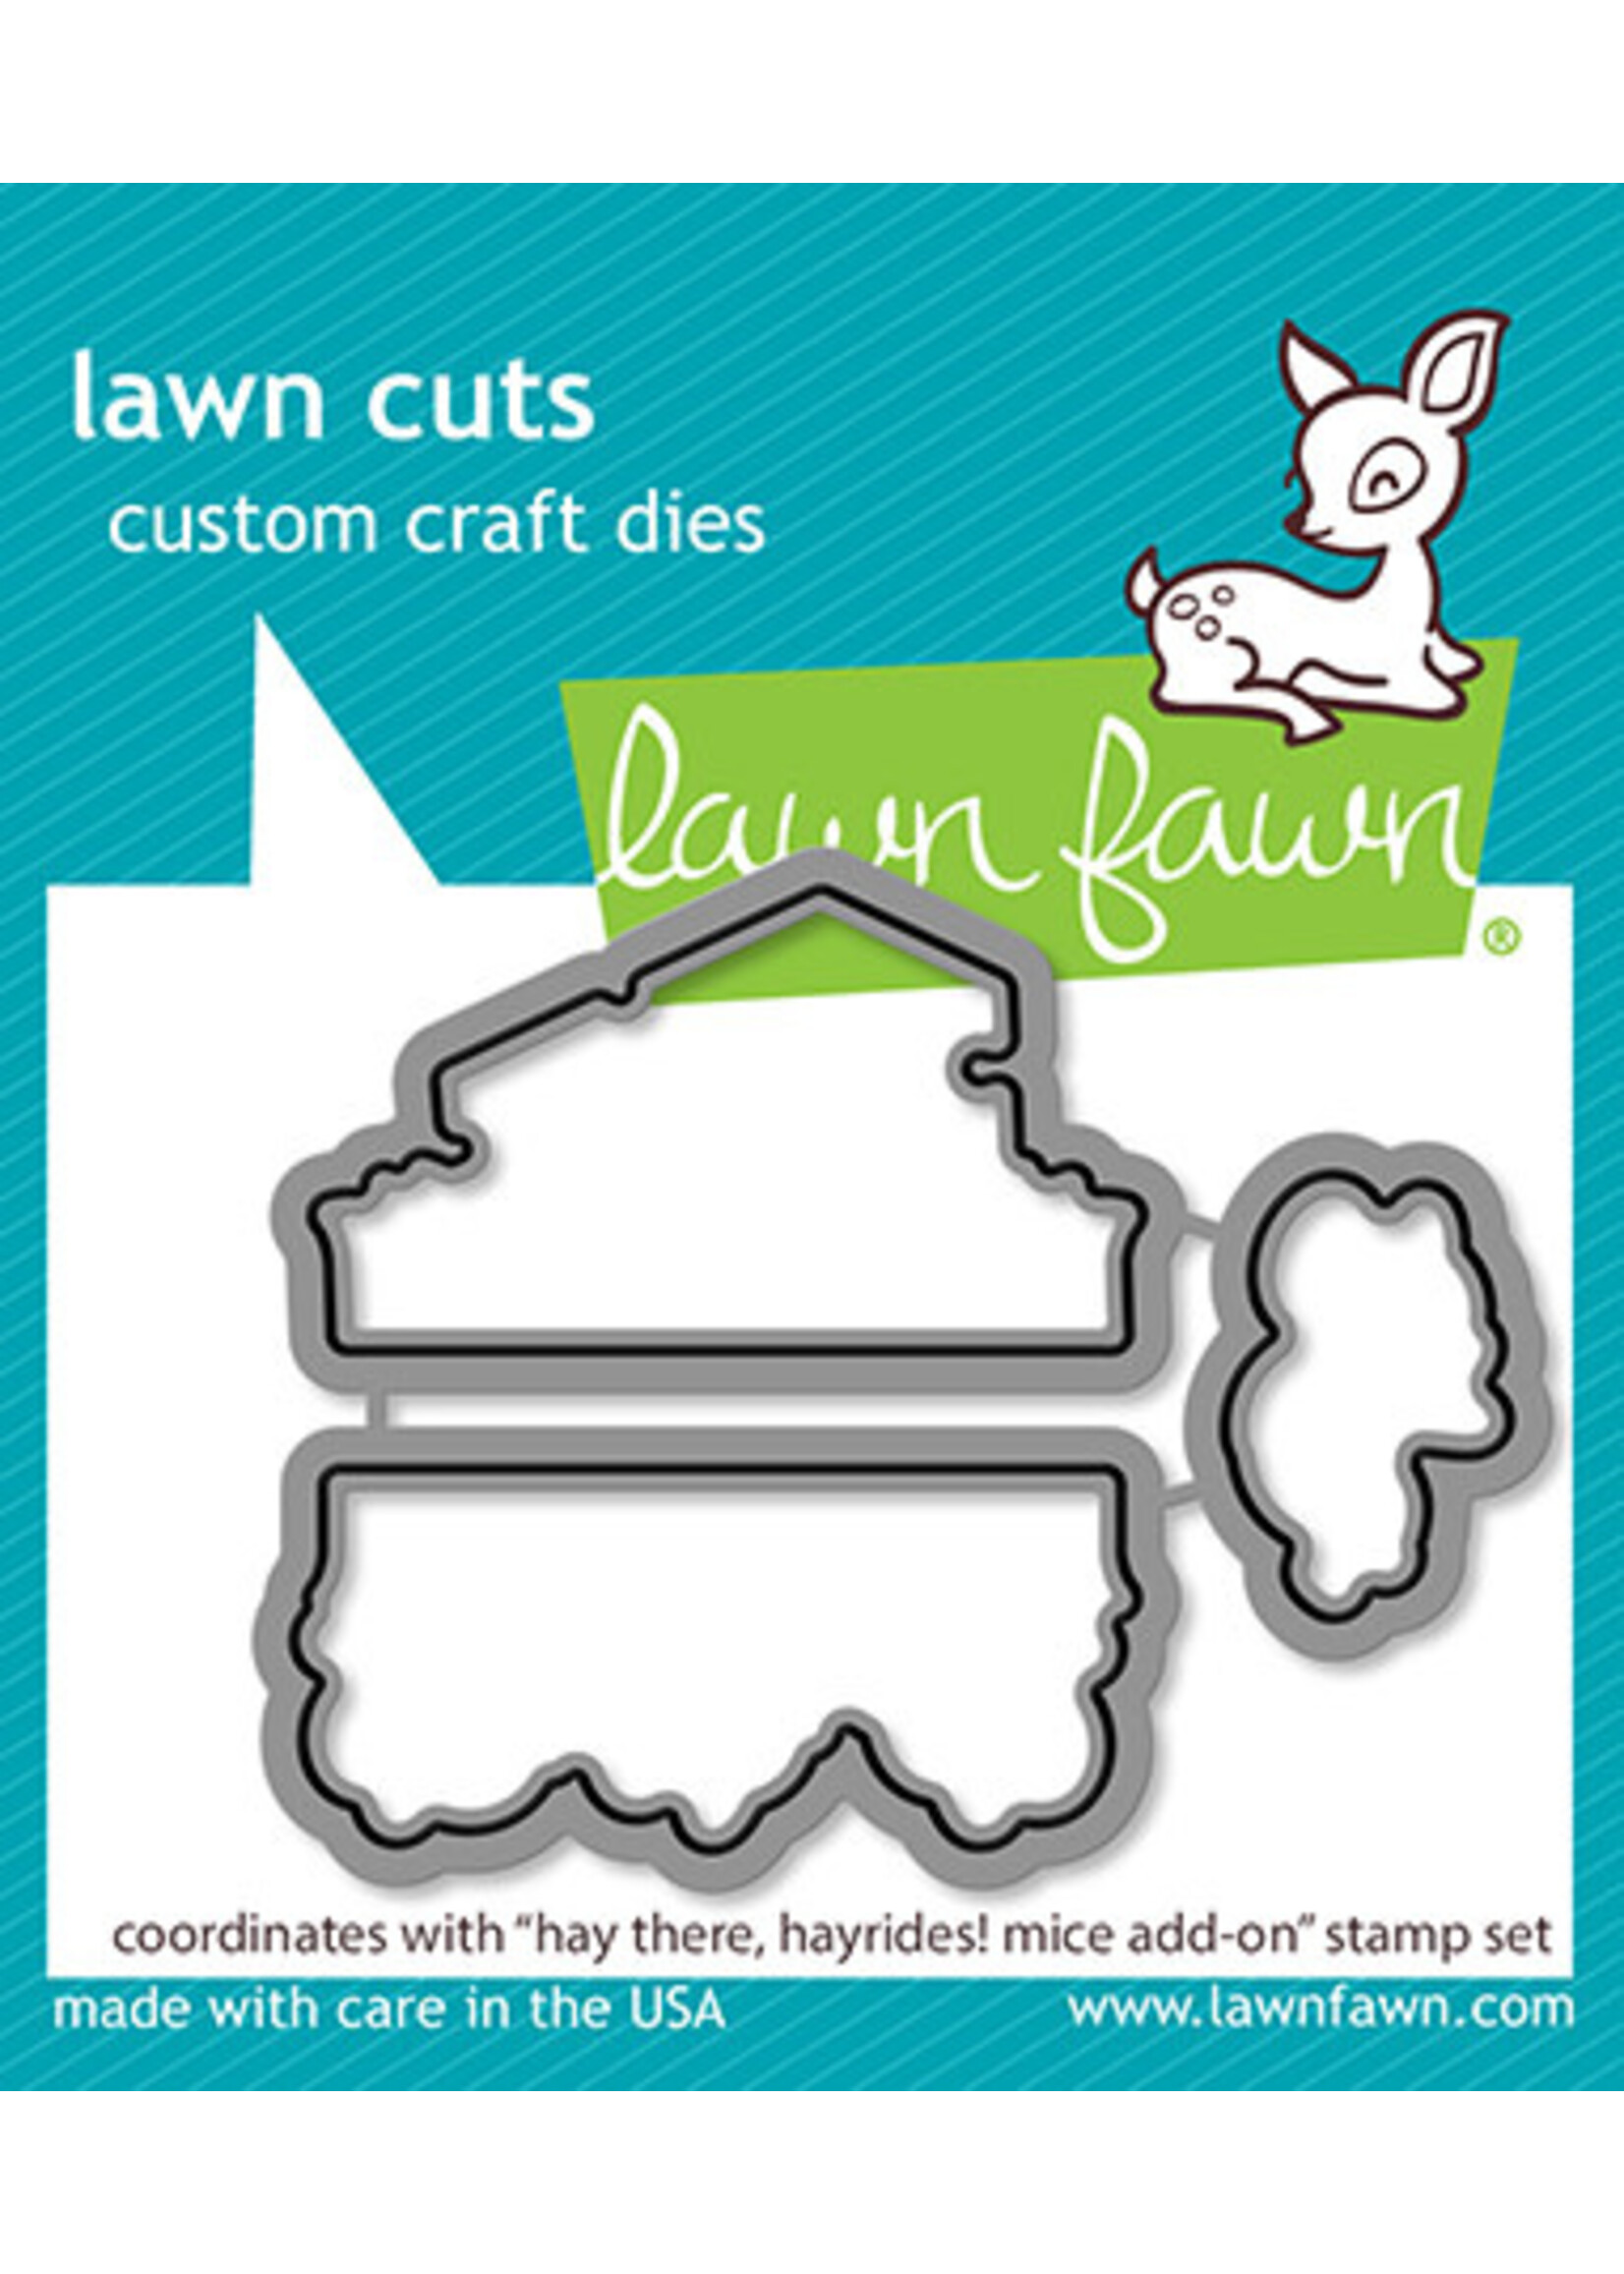 Lawn Fawn hay there, hayrides! mice add-on lawn cuts die